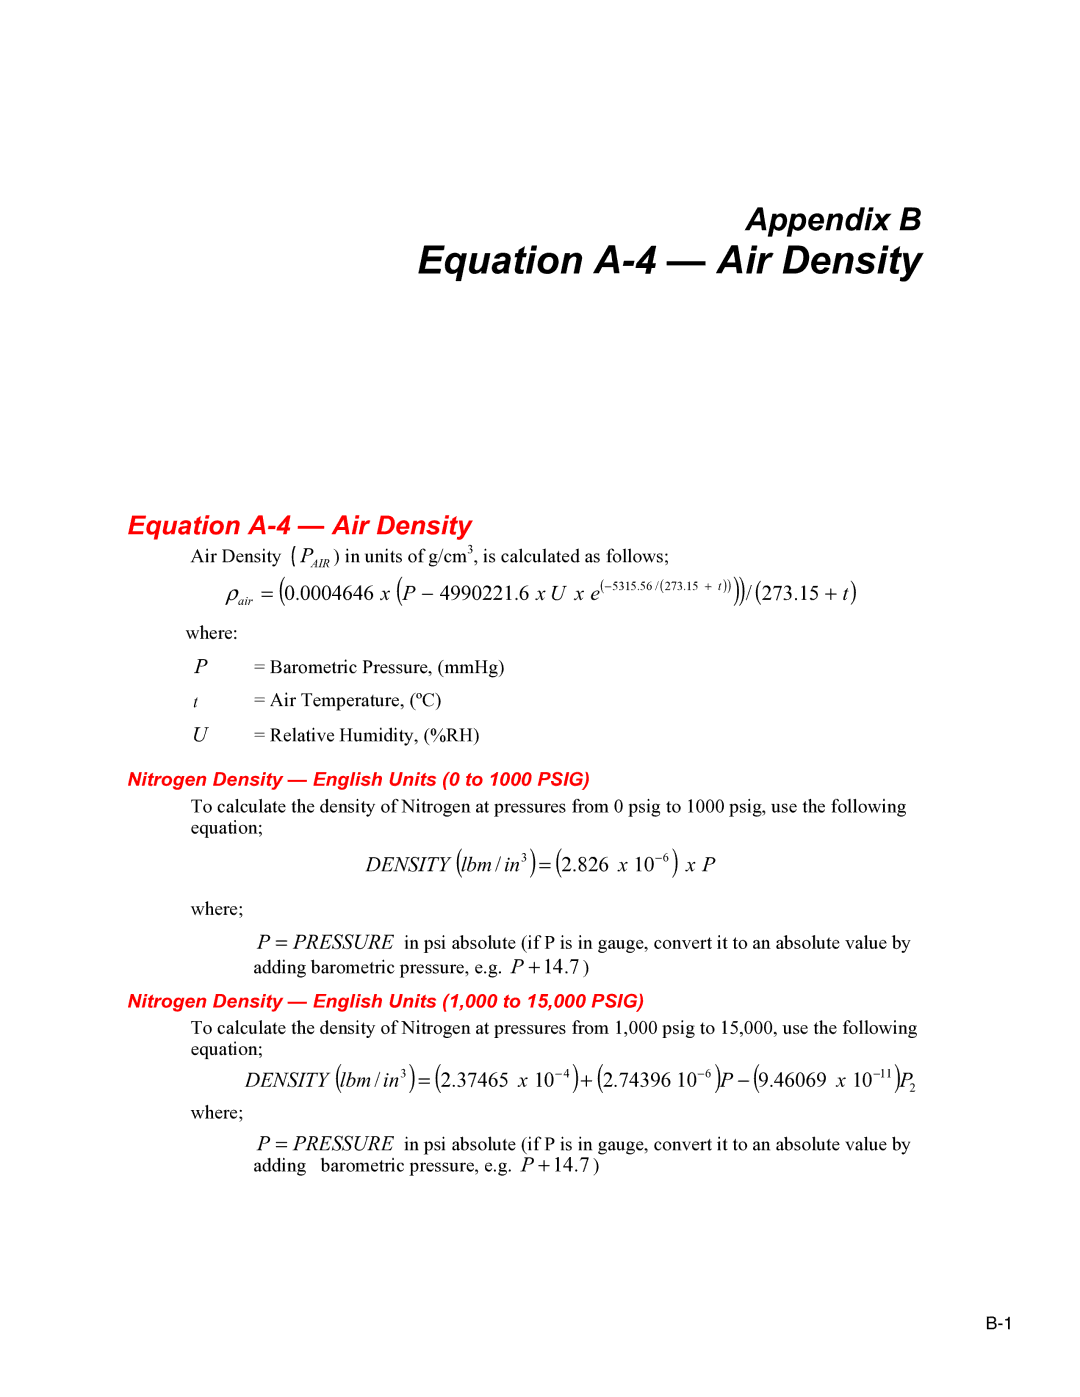 Fluke 2470 specifications Equation A-4 Air Density, Nitrogen Density English Units 0 to 1000 Psig 